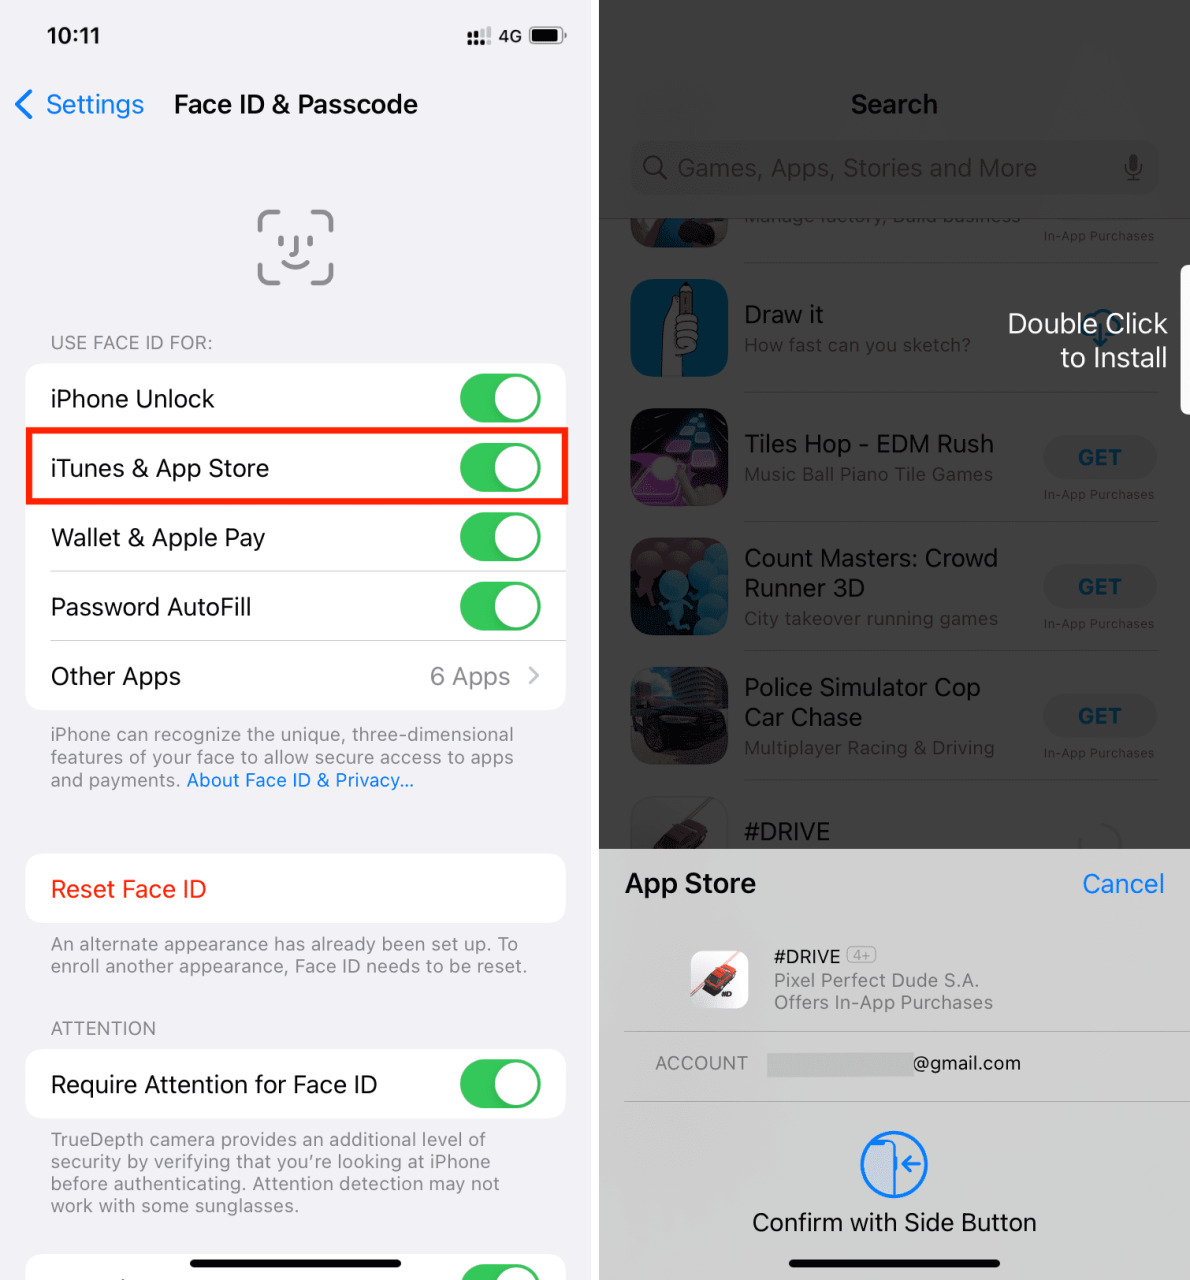 Alerta de doble clic para instalar en iPhone App Store